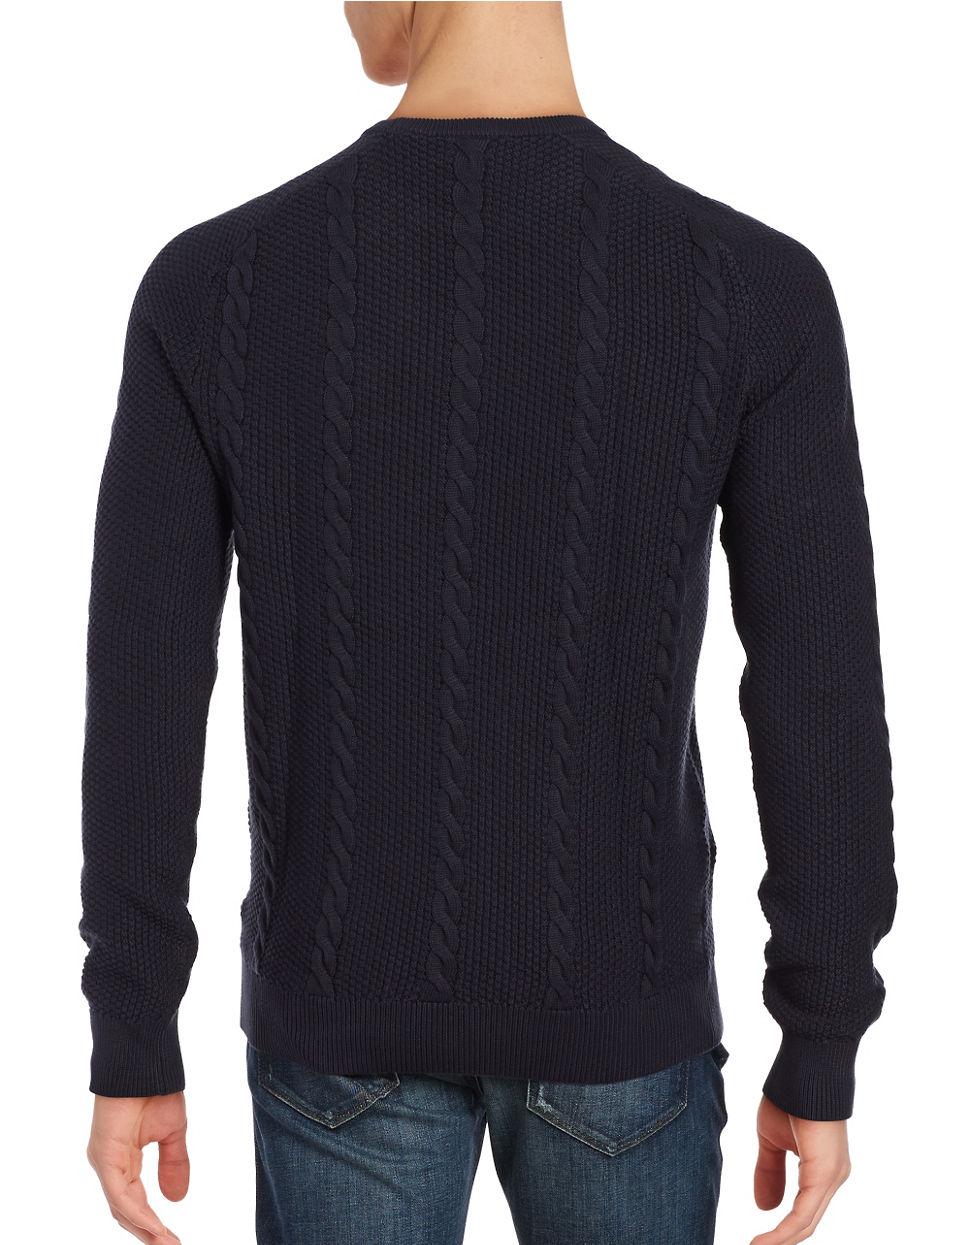 Lacoste Wool Full Zip High Collar Sweater in Blue for Men - Lyst